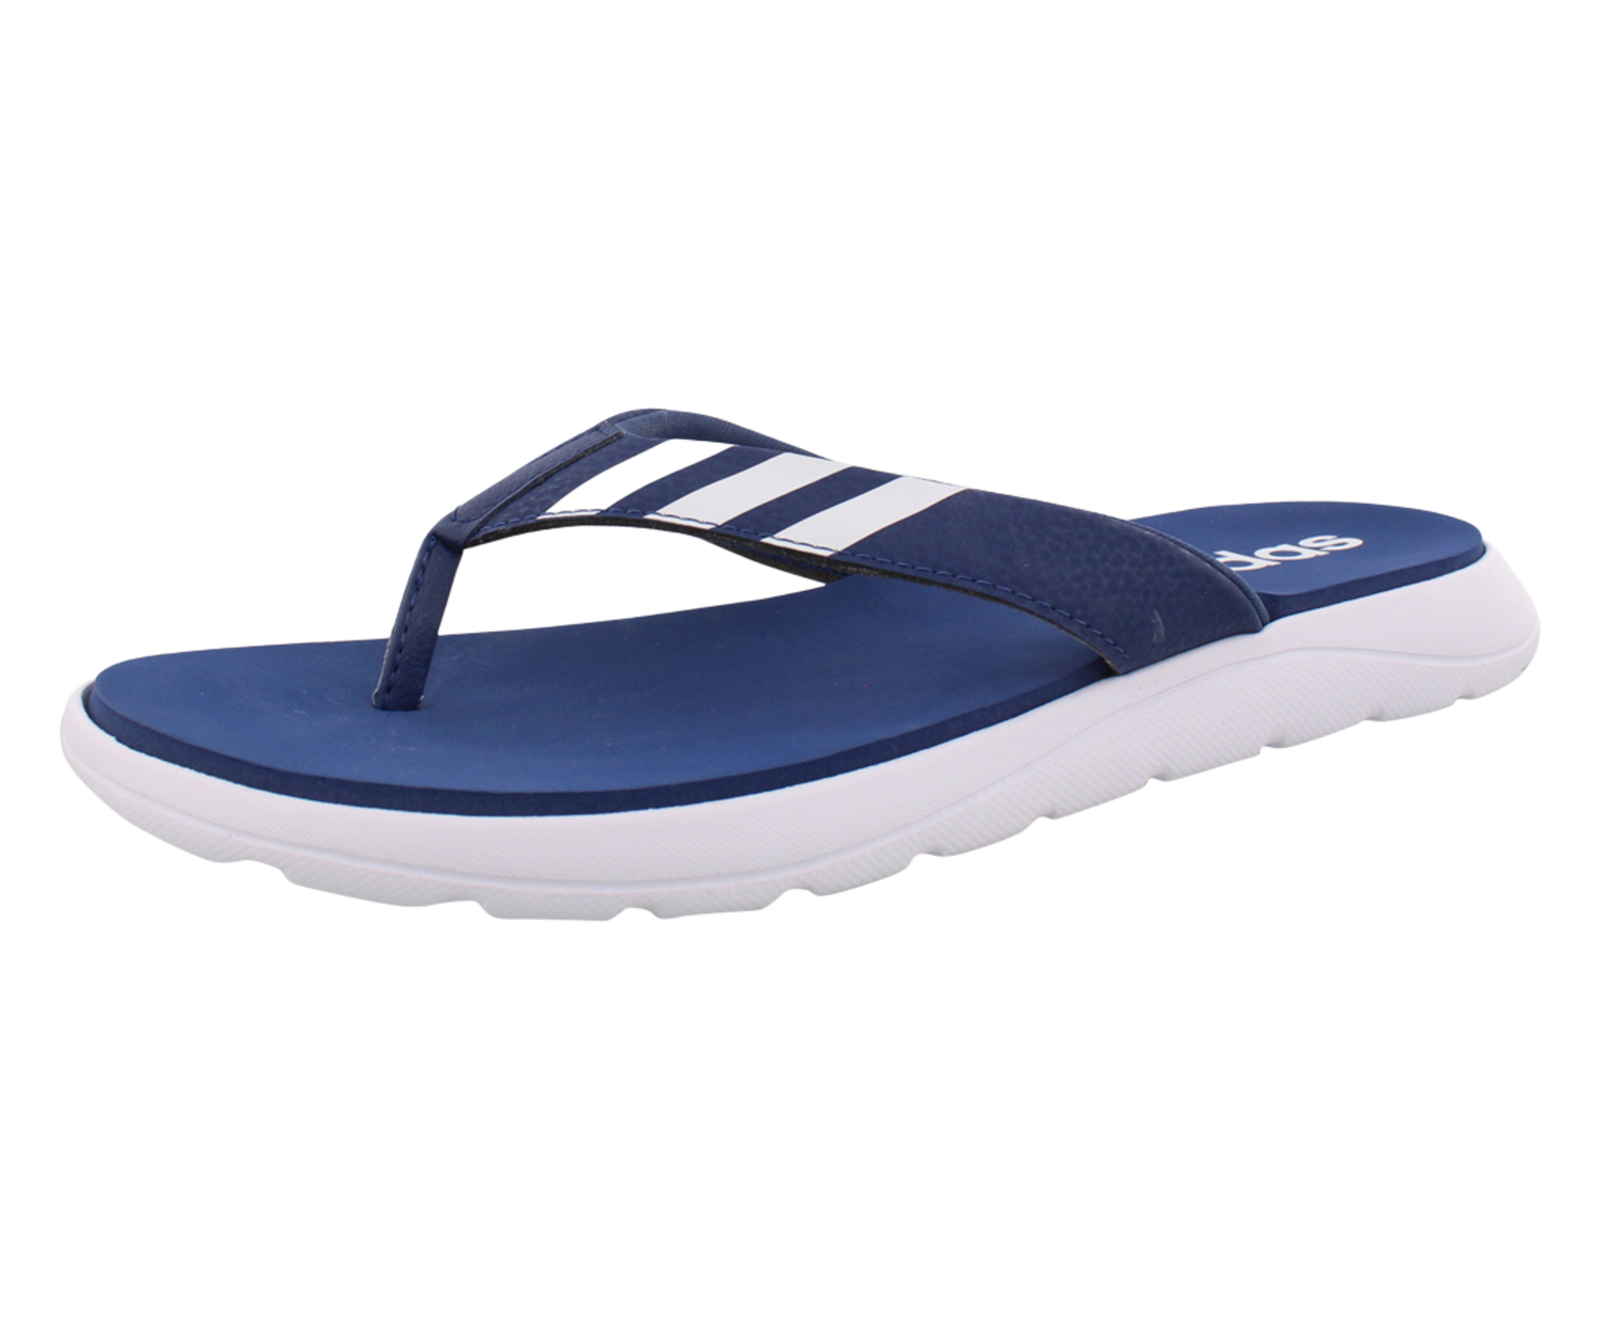 Adidas Comfort Flip Flop – SNEAKERHEAD.com